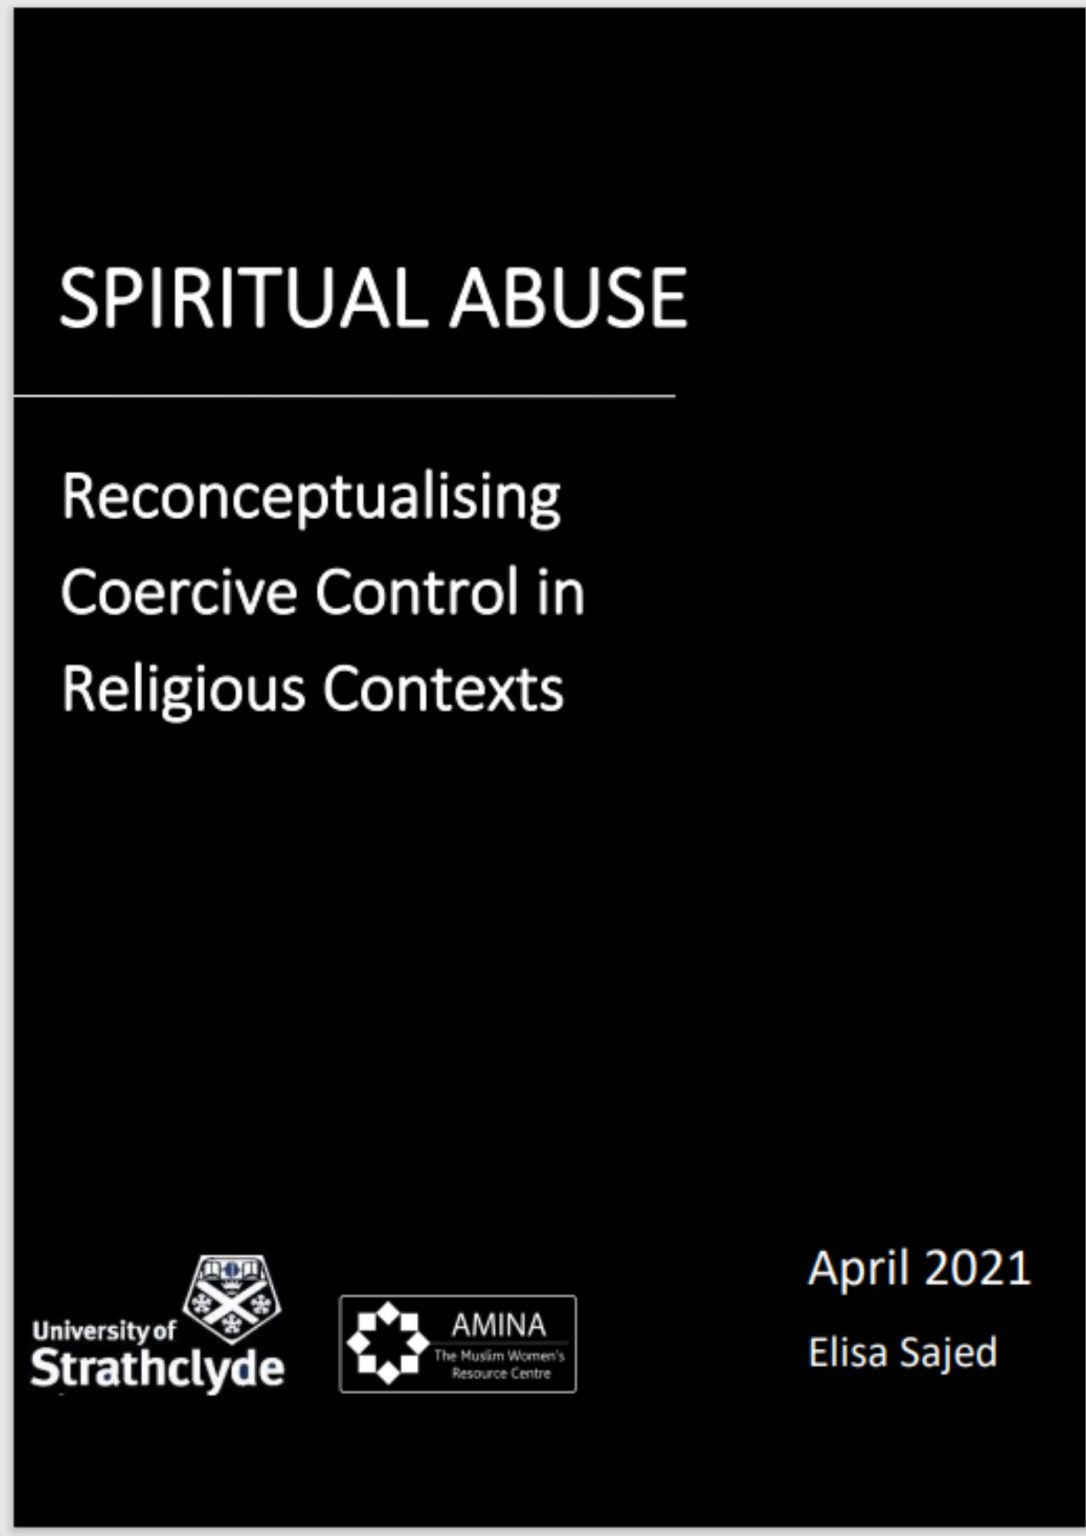 amina-resources-spiritual abuse 2021